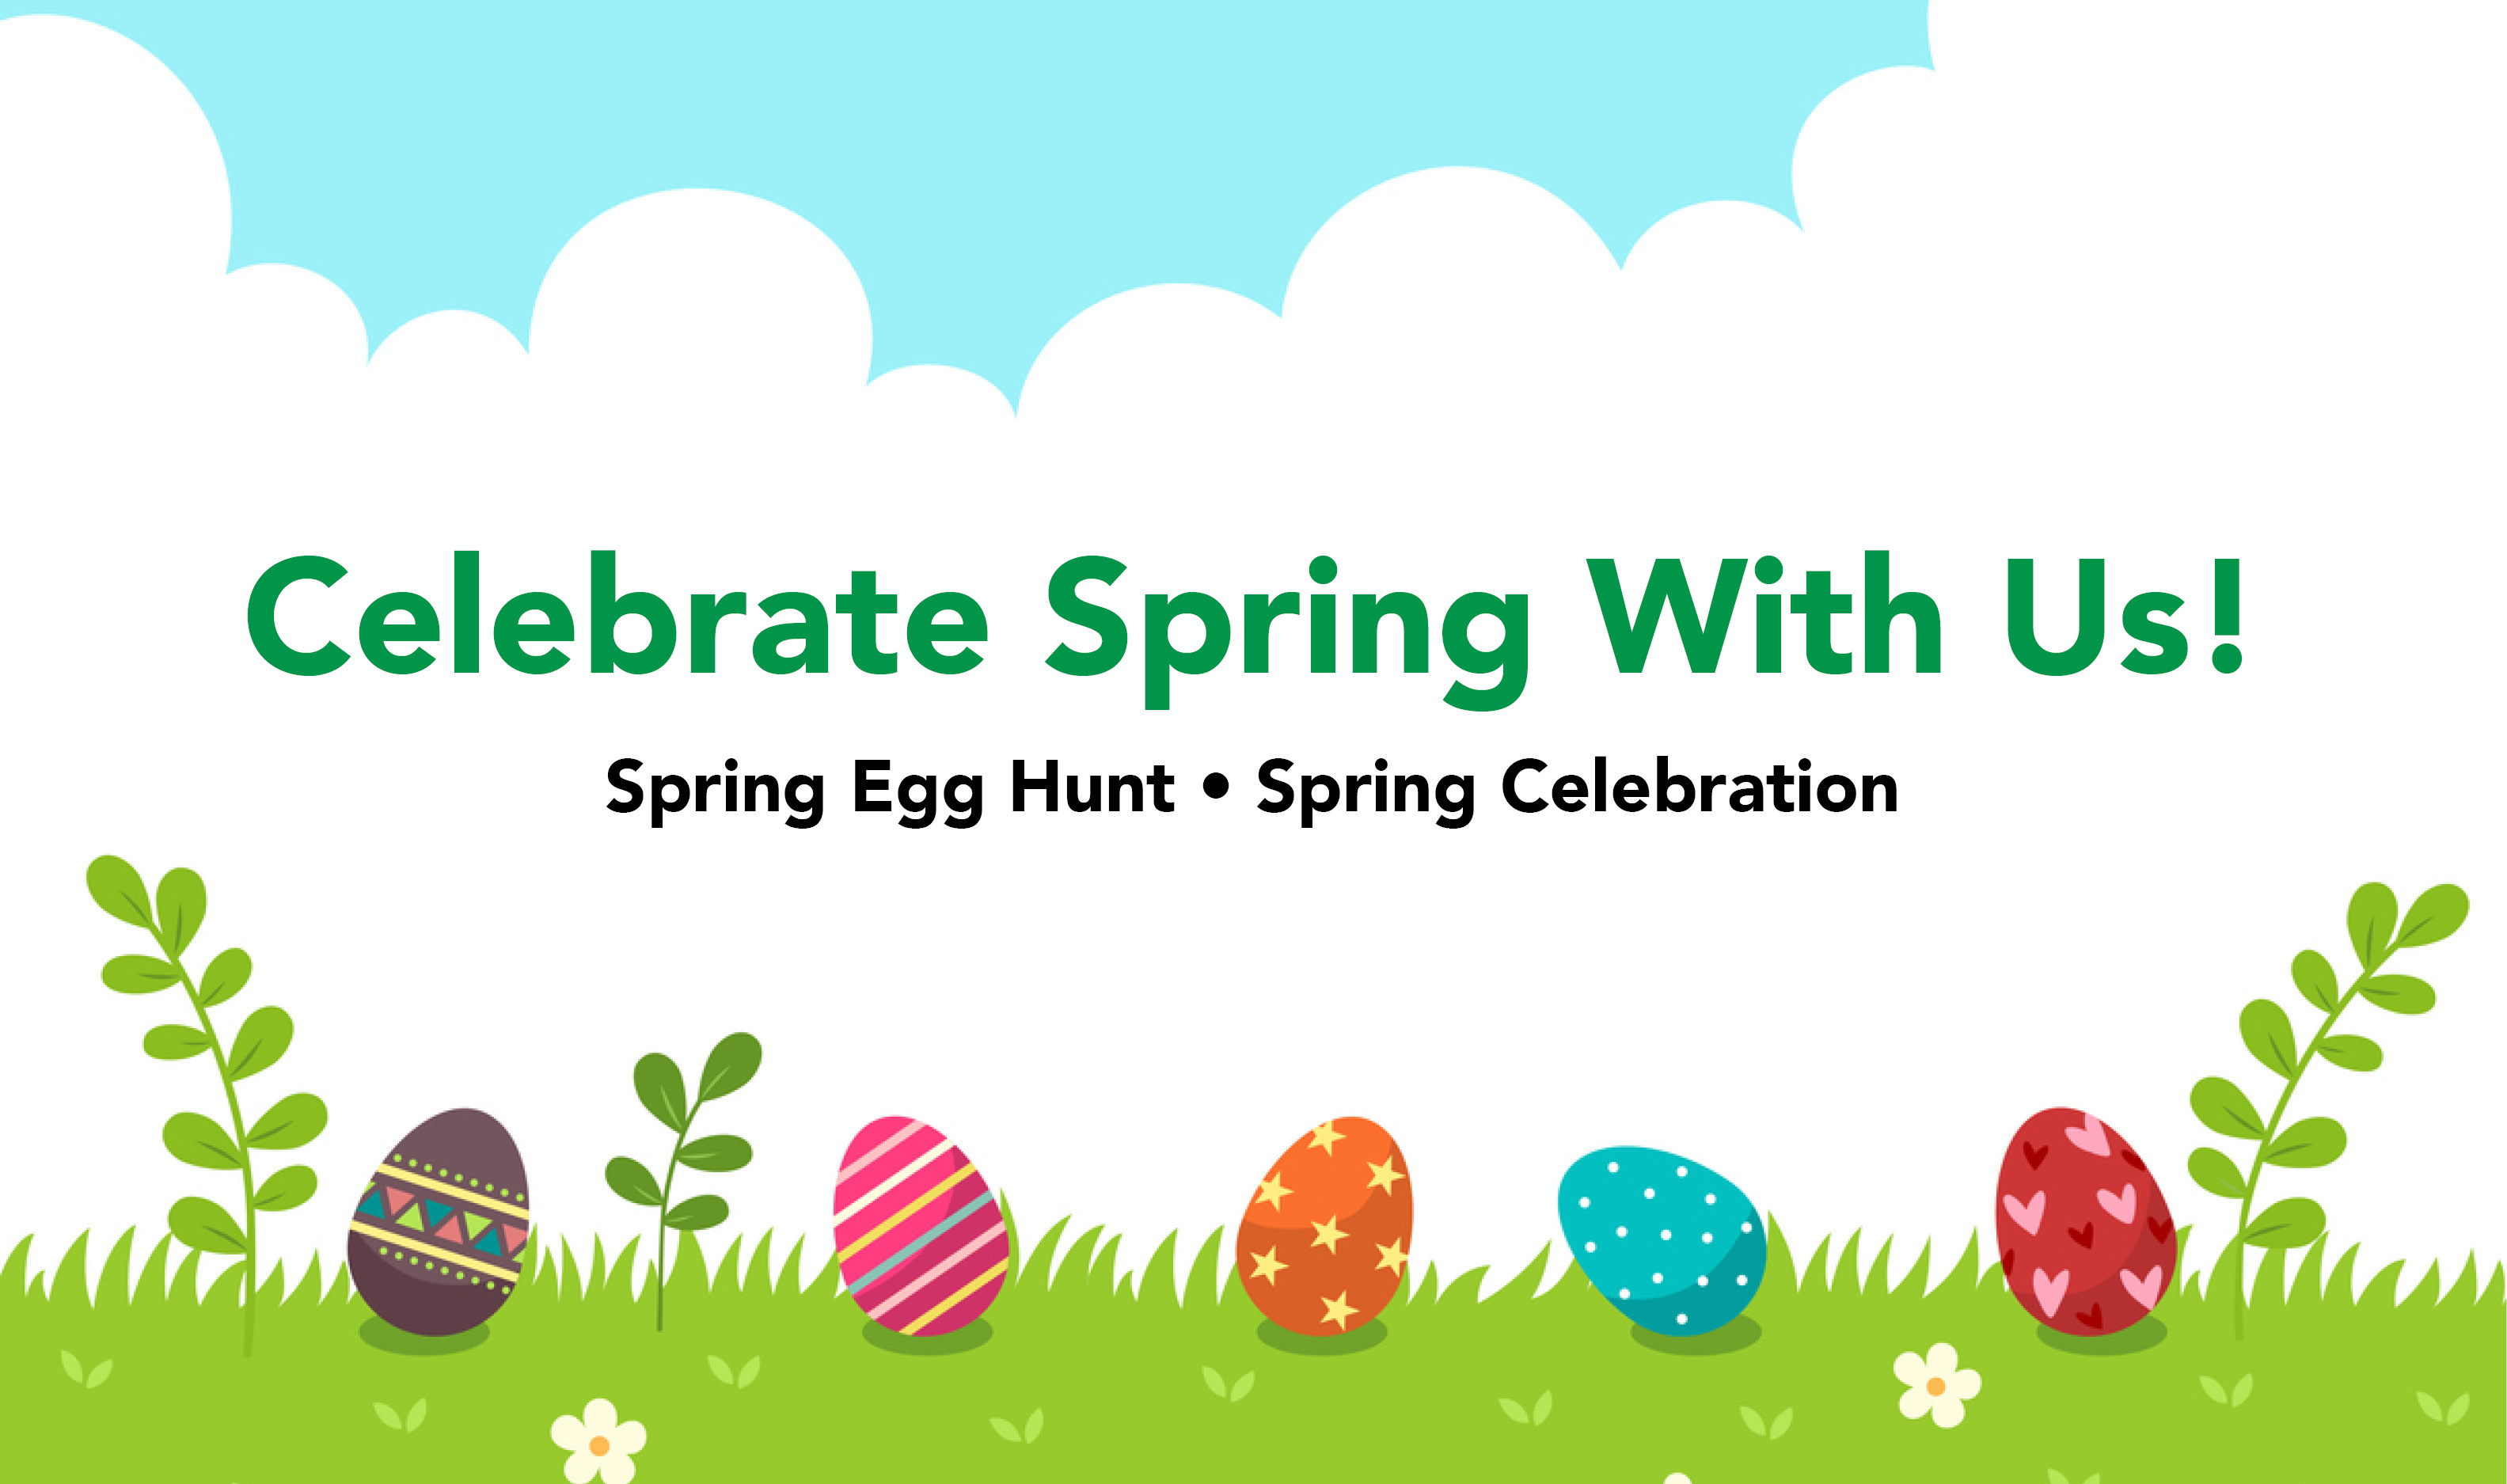 Spring Celebrations - THPRD's upcoming egg hunts